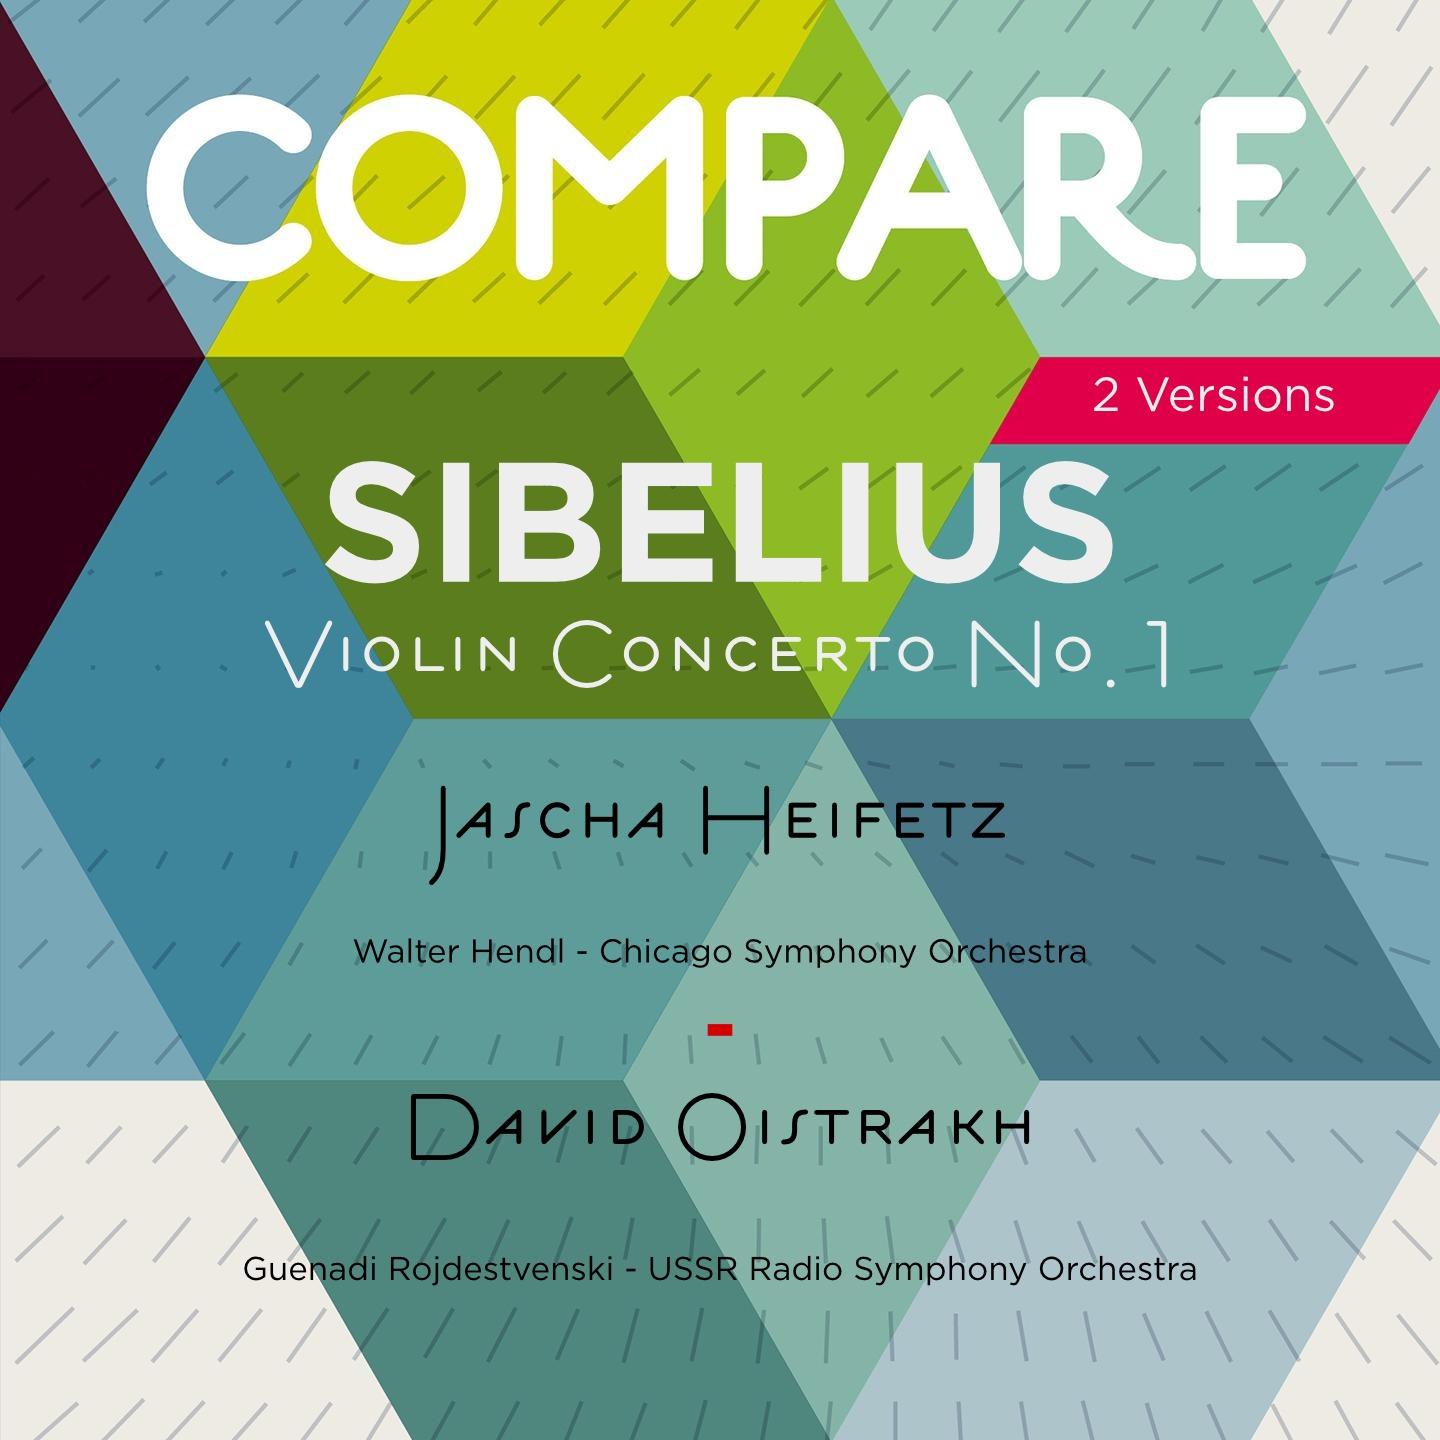 Violin Concerto No. 1 in D Minor, Op. 47: I. Allegro moderato